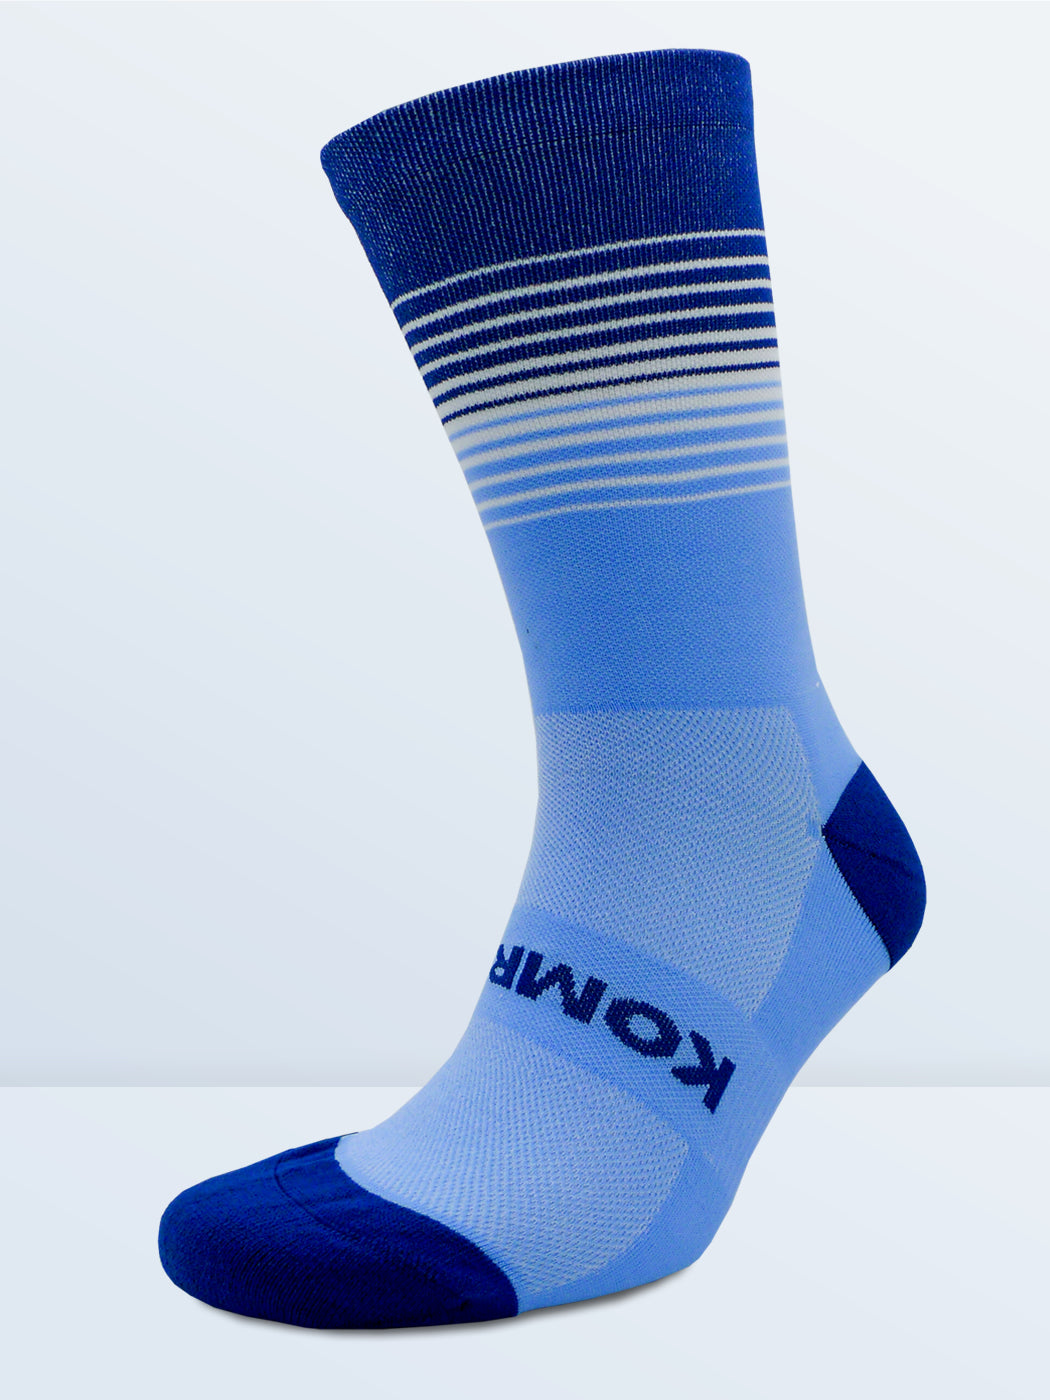 Swagger Socks - Sky & Navy Blue